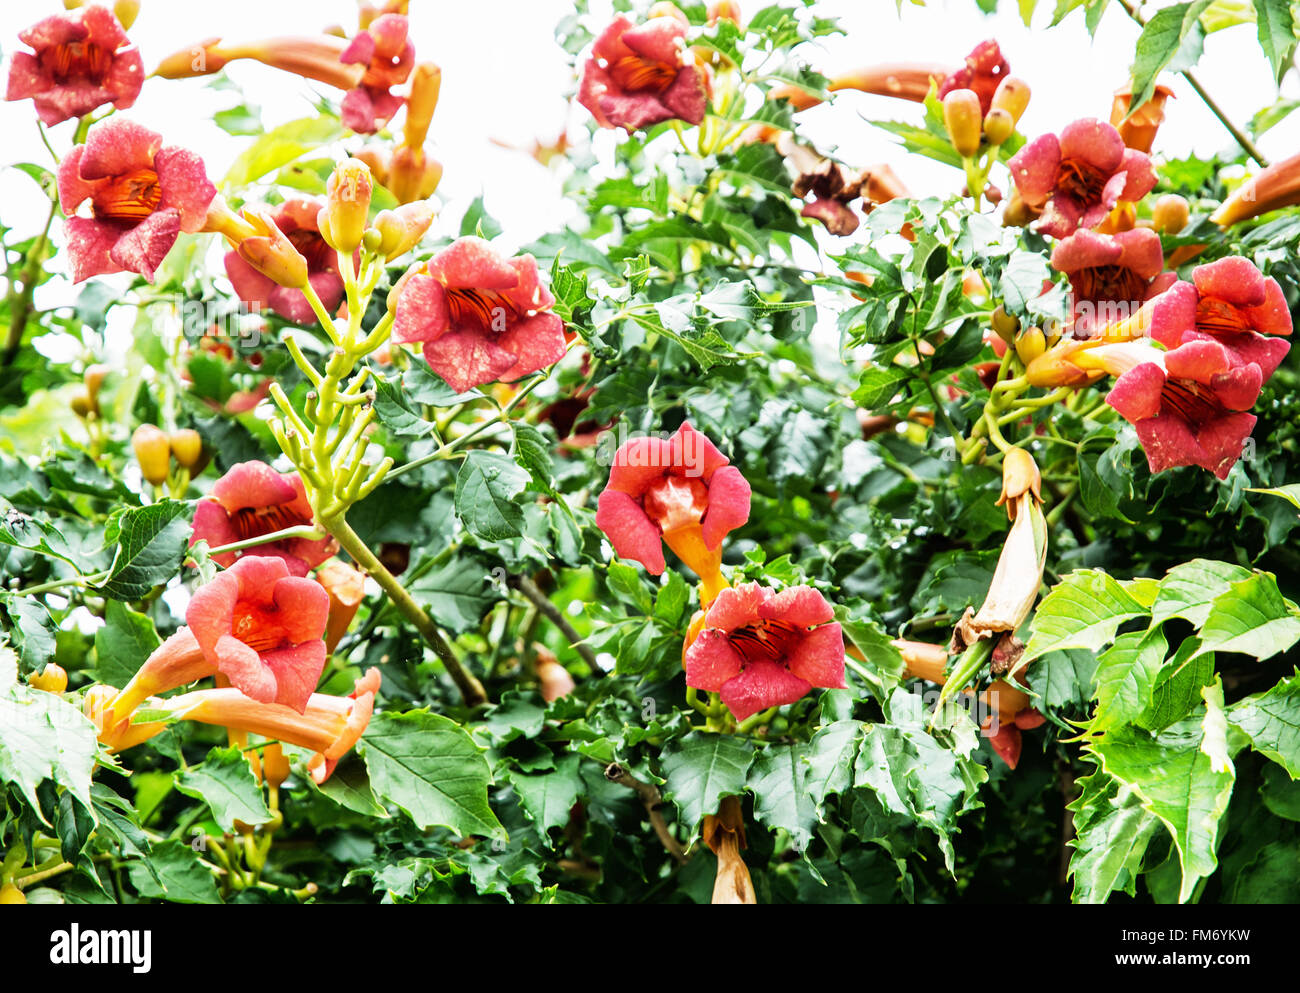 Trumpet vine flowers - Campsis x tagliabuana. Gardening theme. Beauty in nature. Stock Photo